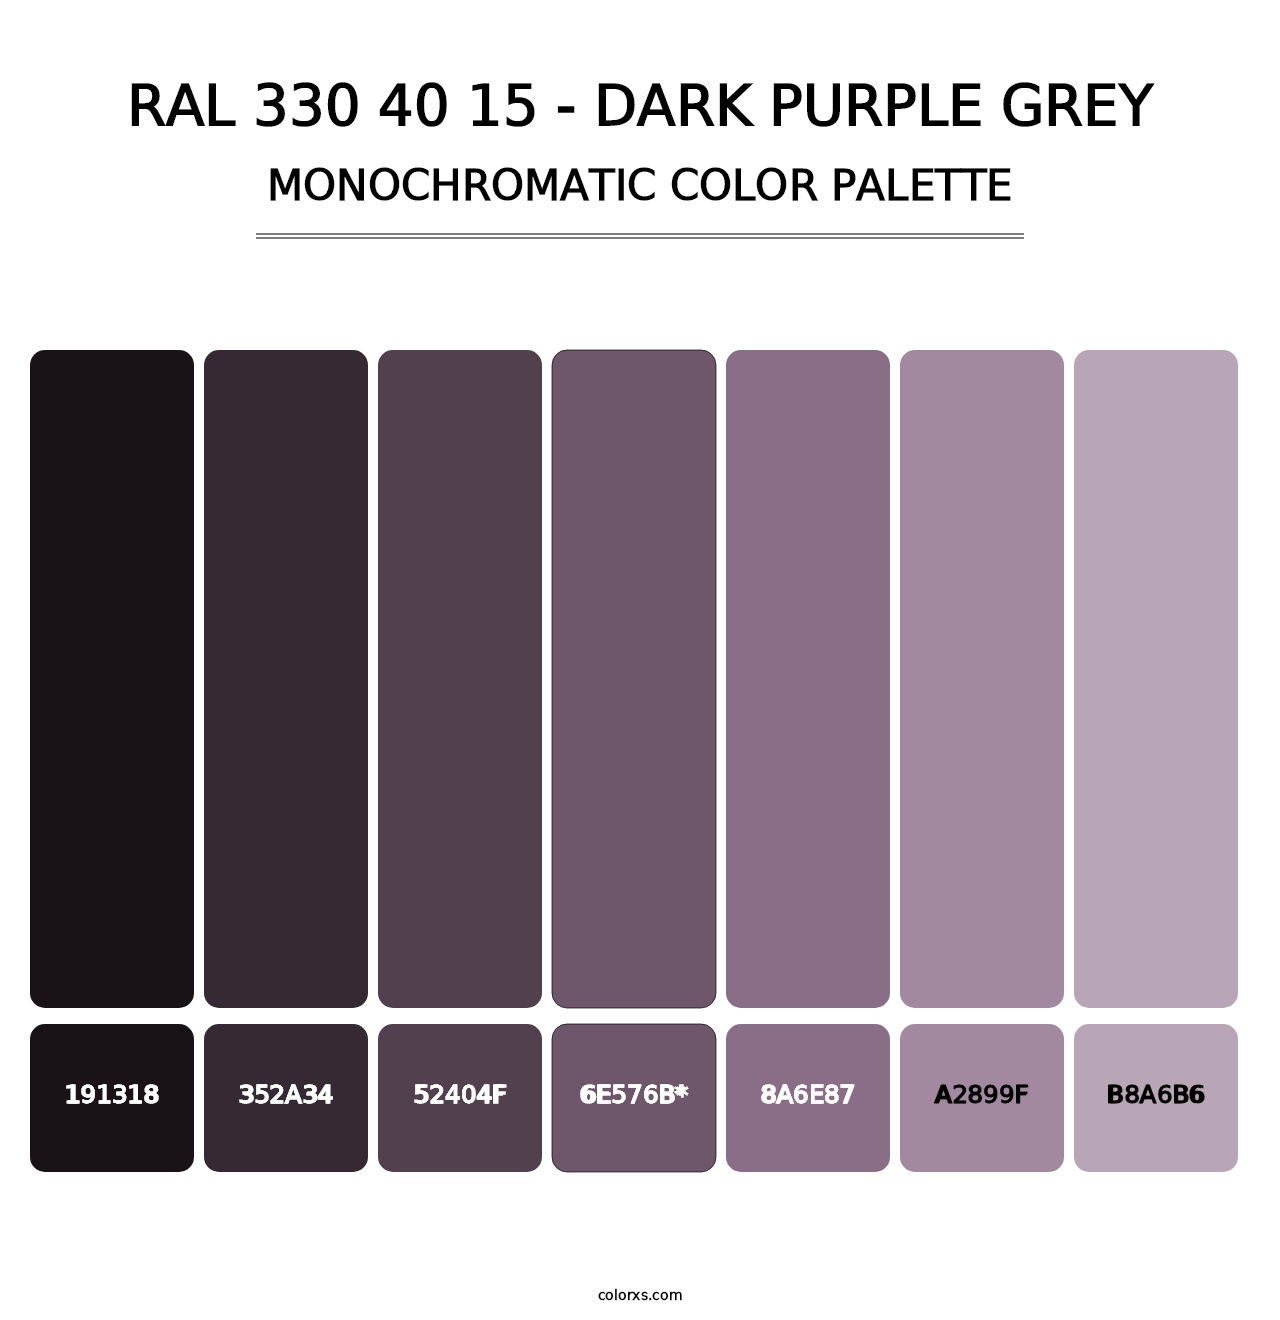 RAL 330 40 15 - Dark Purple Grey - Monochromatic Color Palette